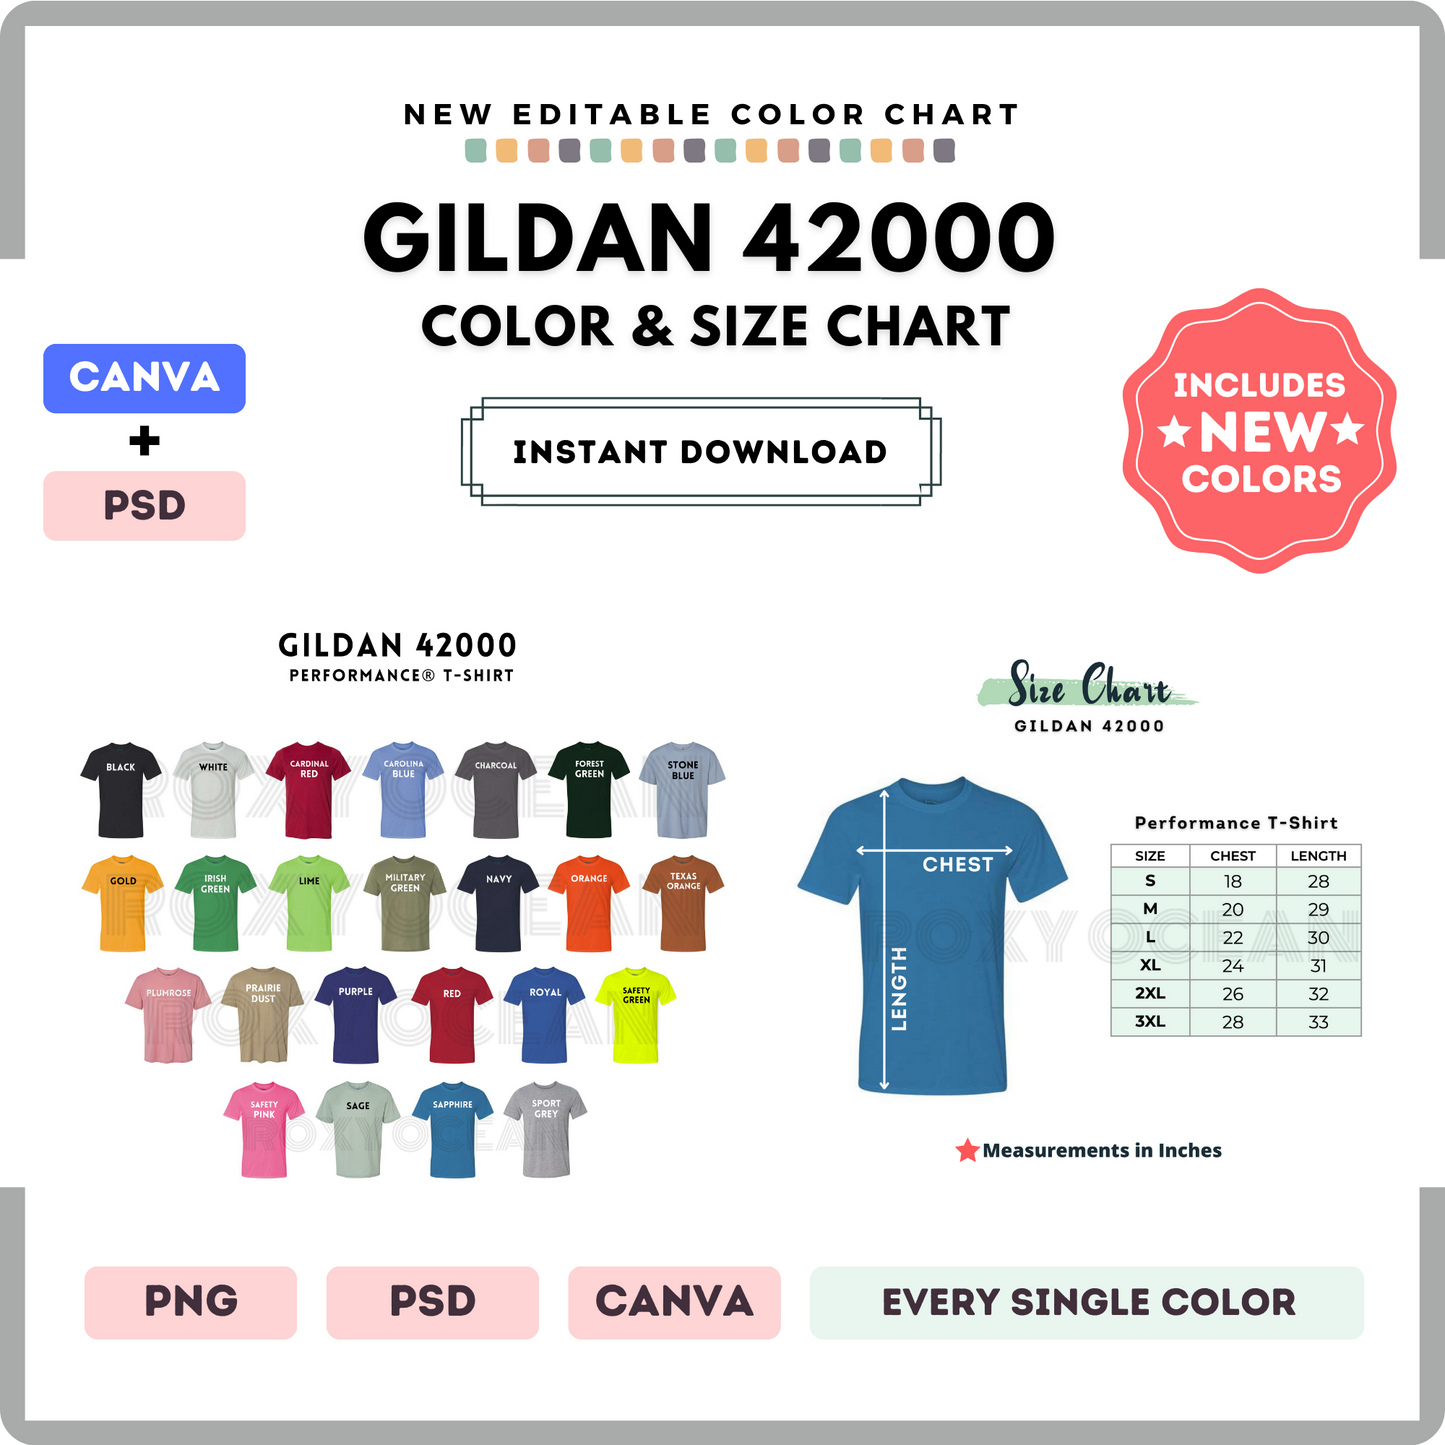 Gildan 42000 Color and Size Chart